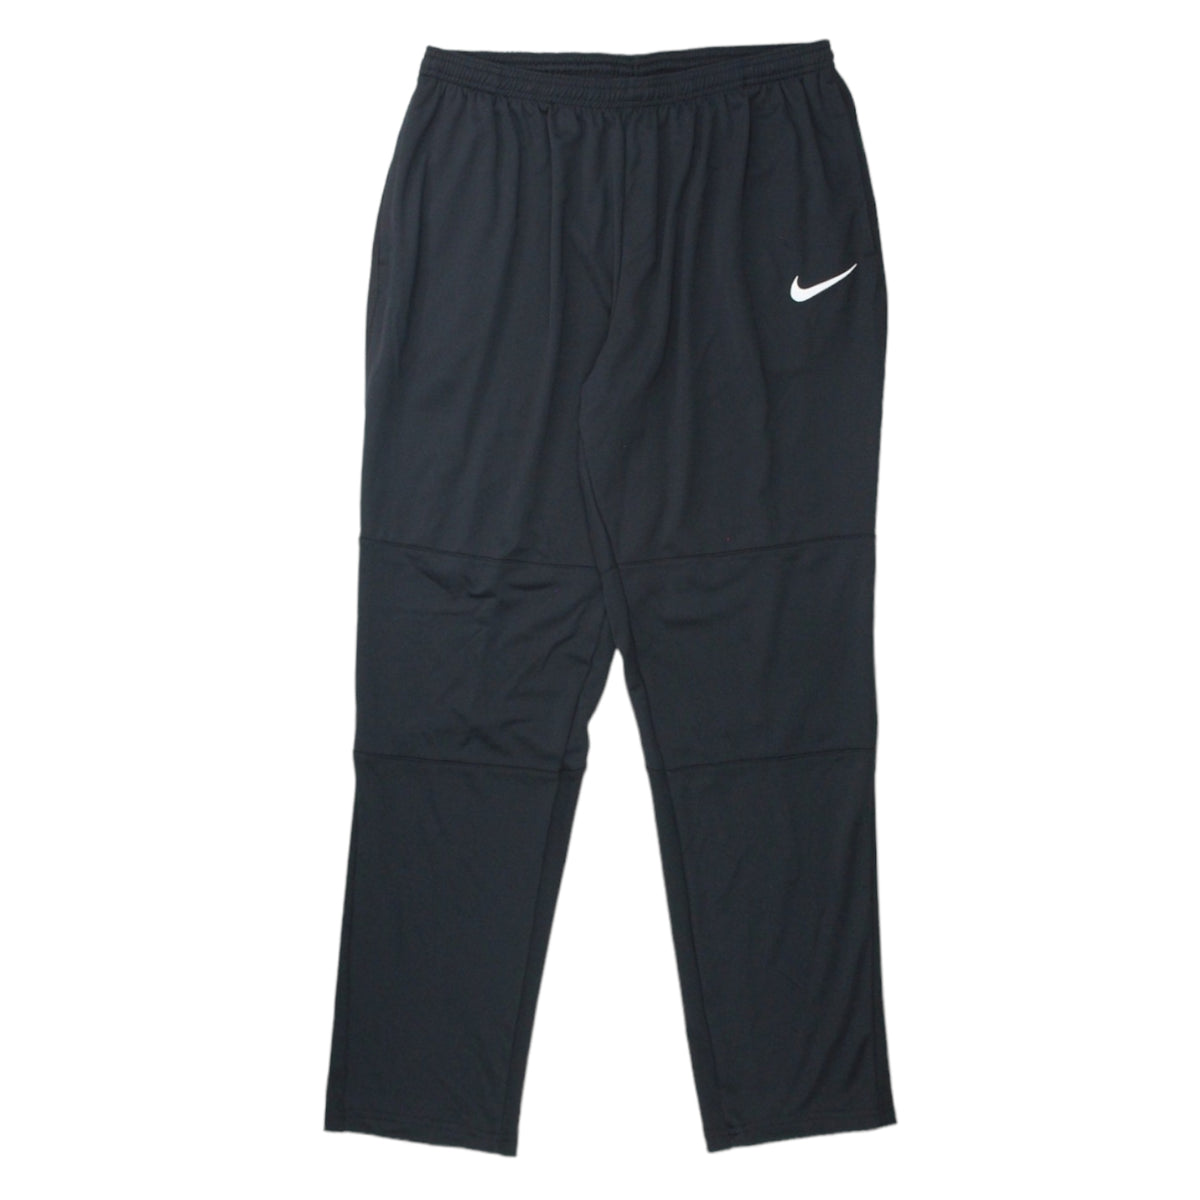 Nike Dry-Fit Black Sports Pants